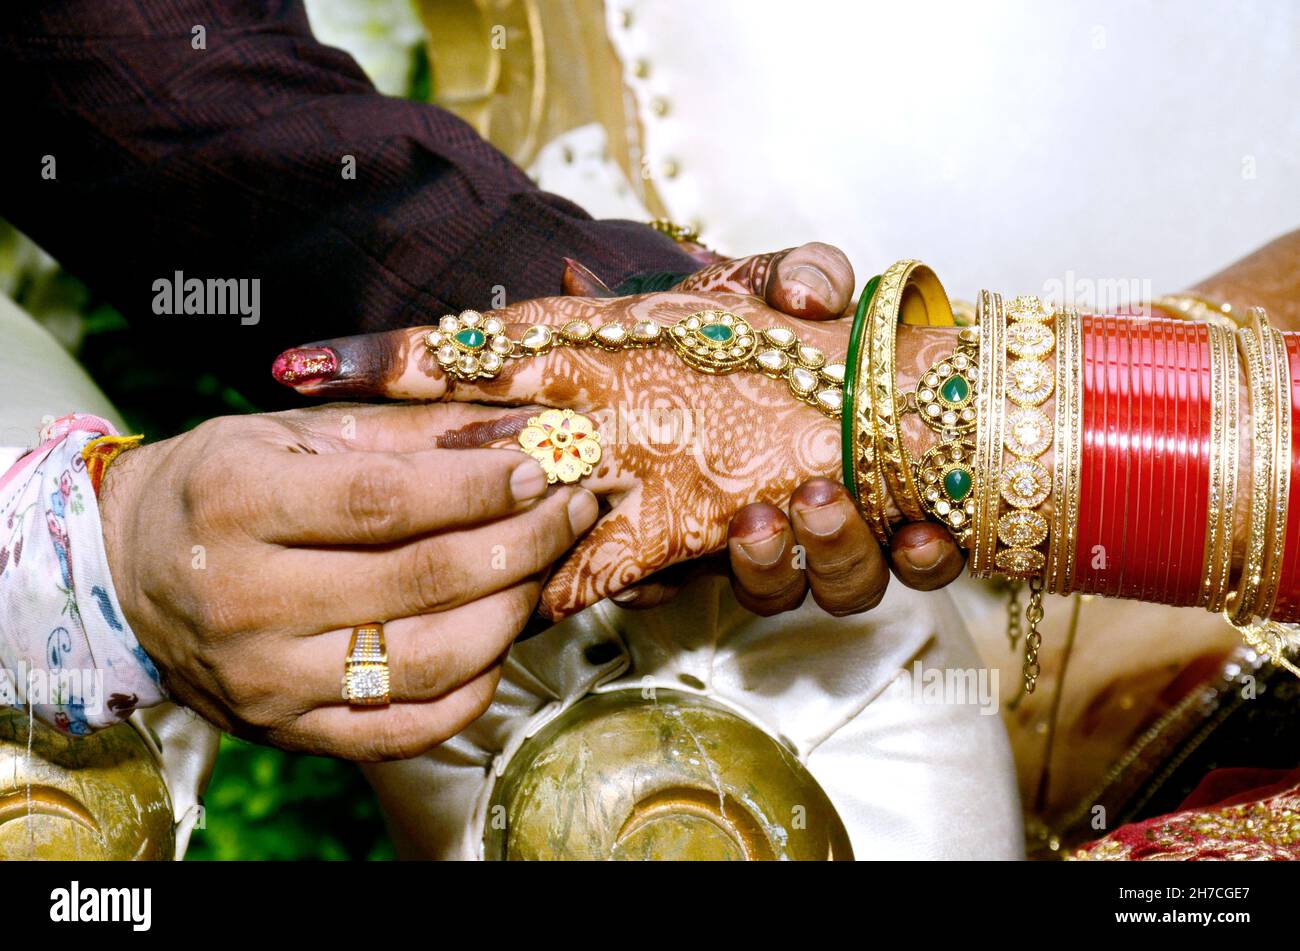 File:Indian Wedding Ceremony (591).jpg - Wikipedia